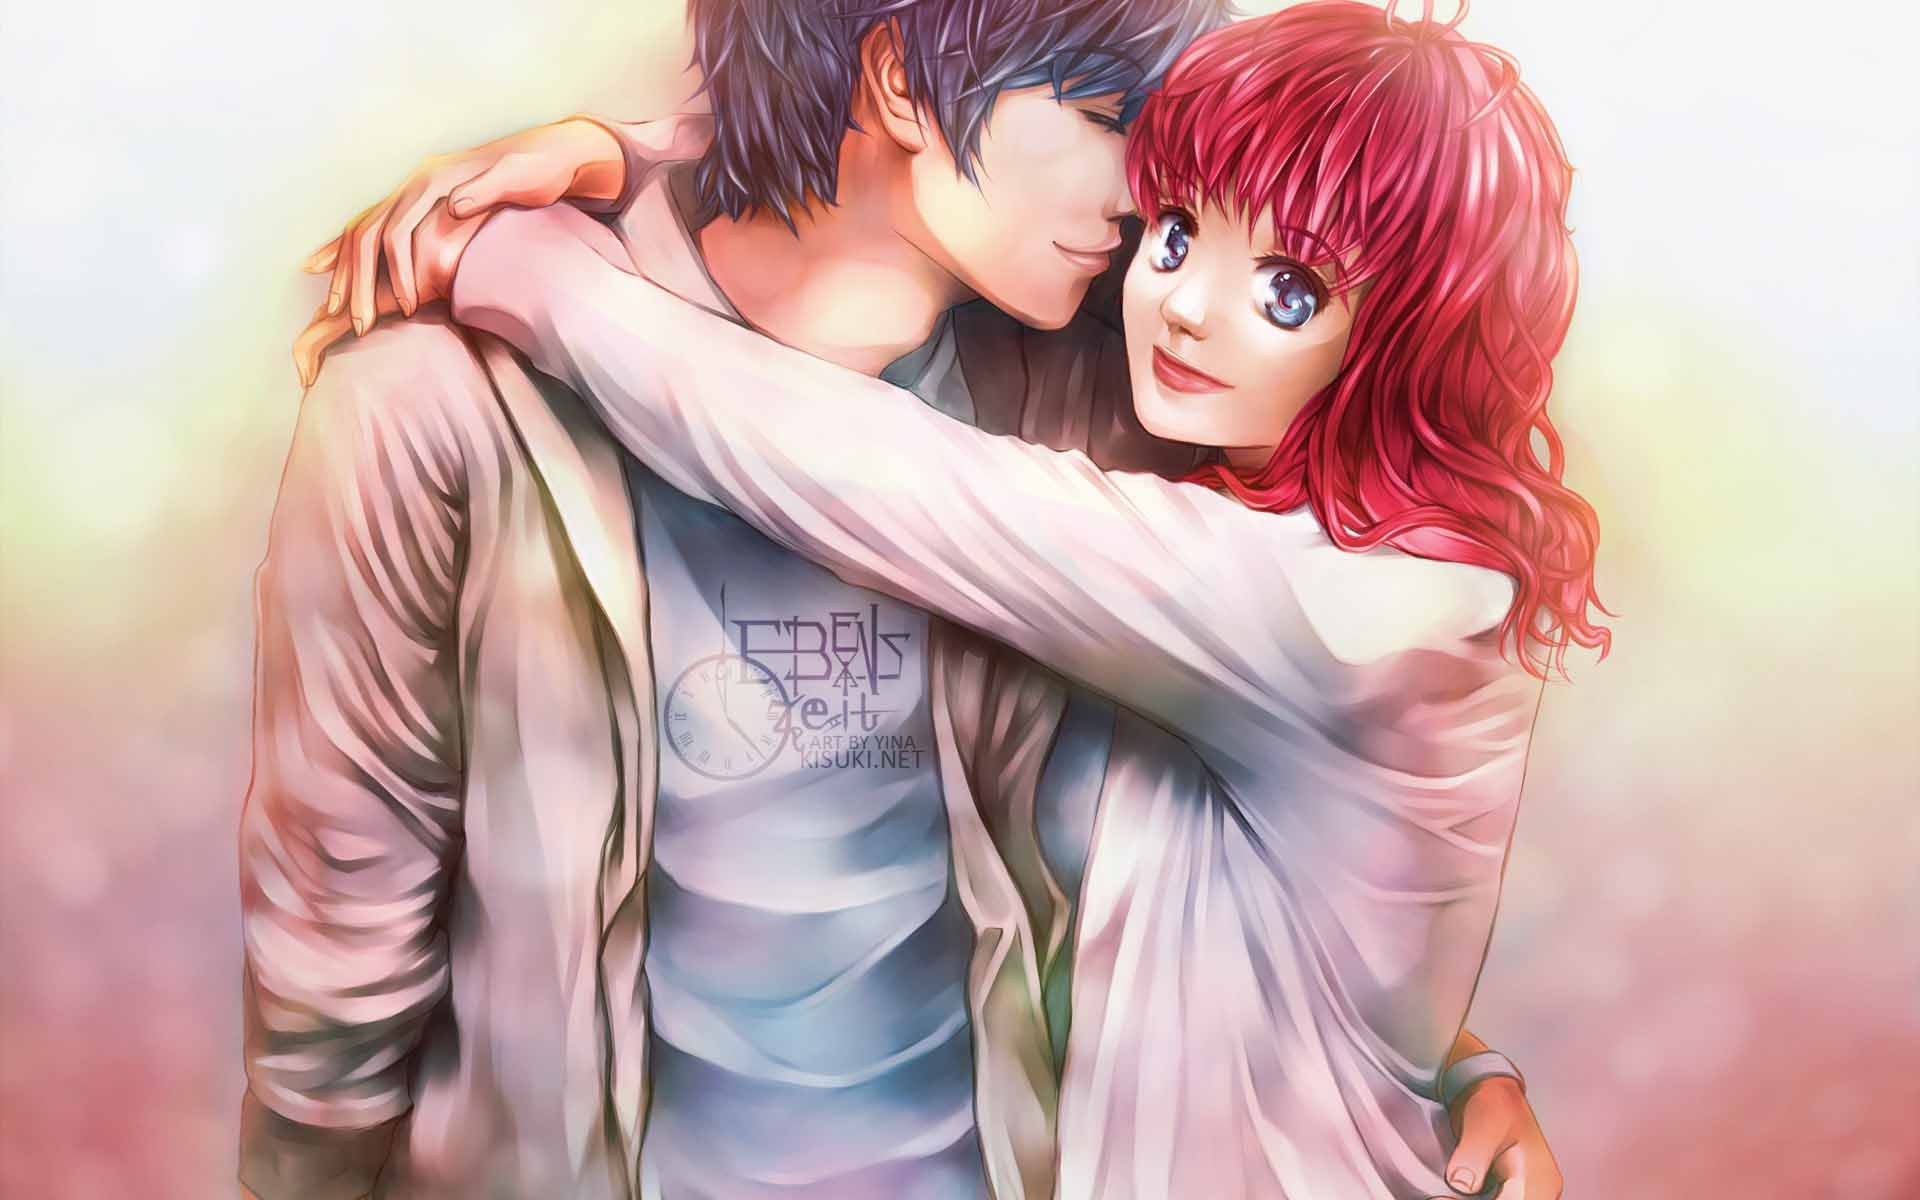 cute anime couple wallpaper for mobile